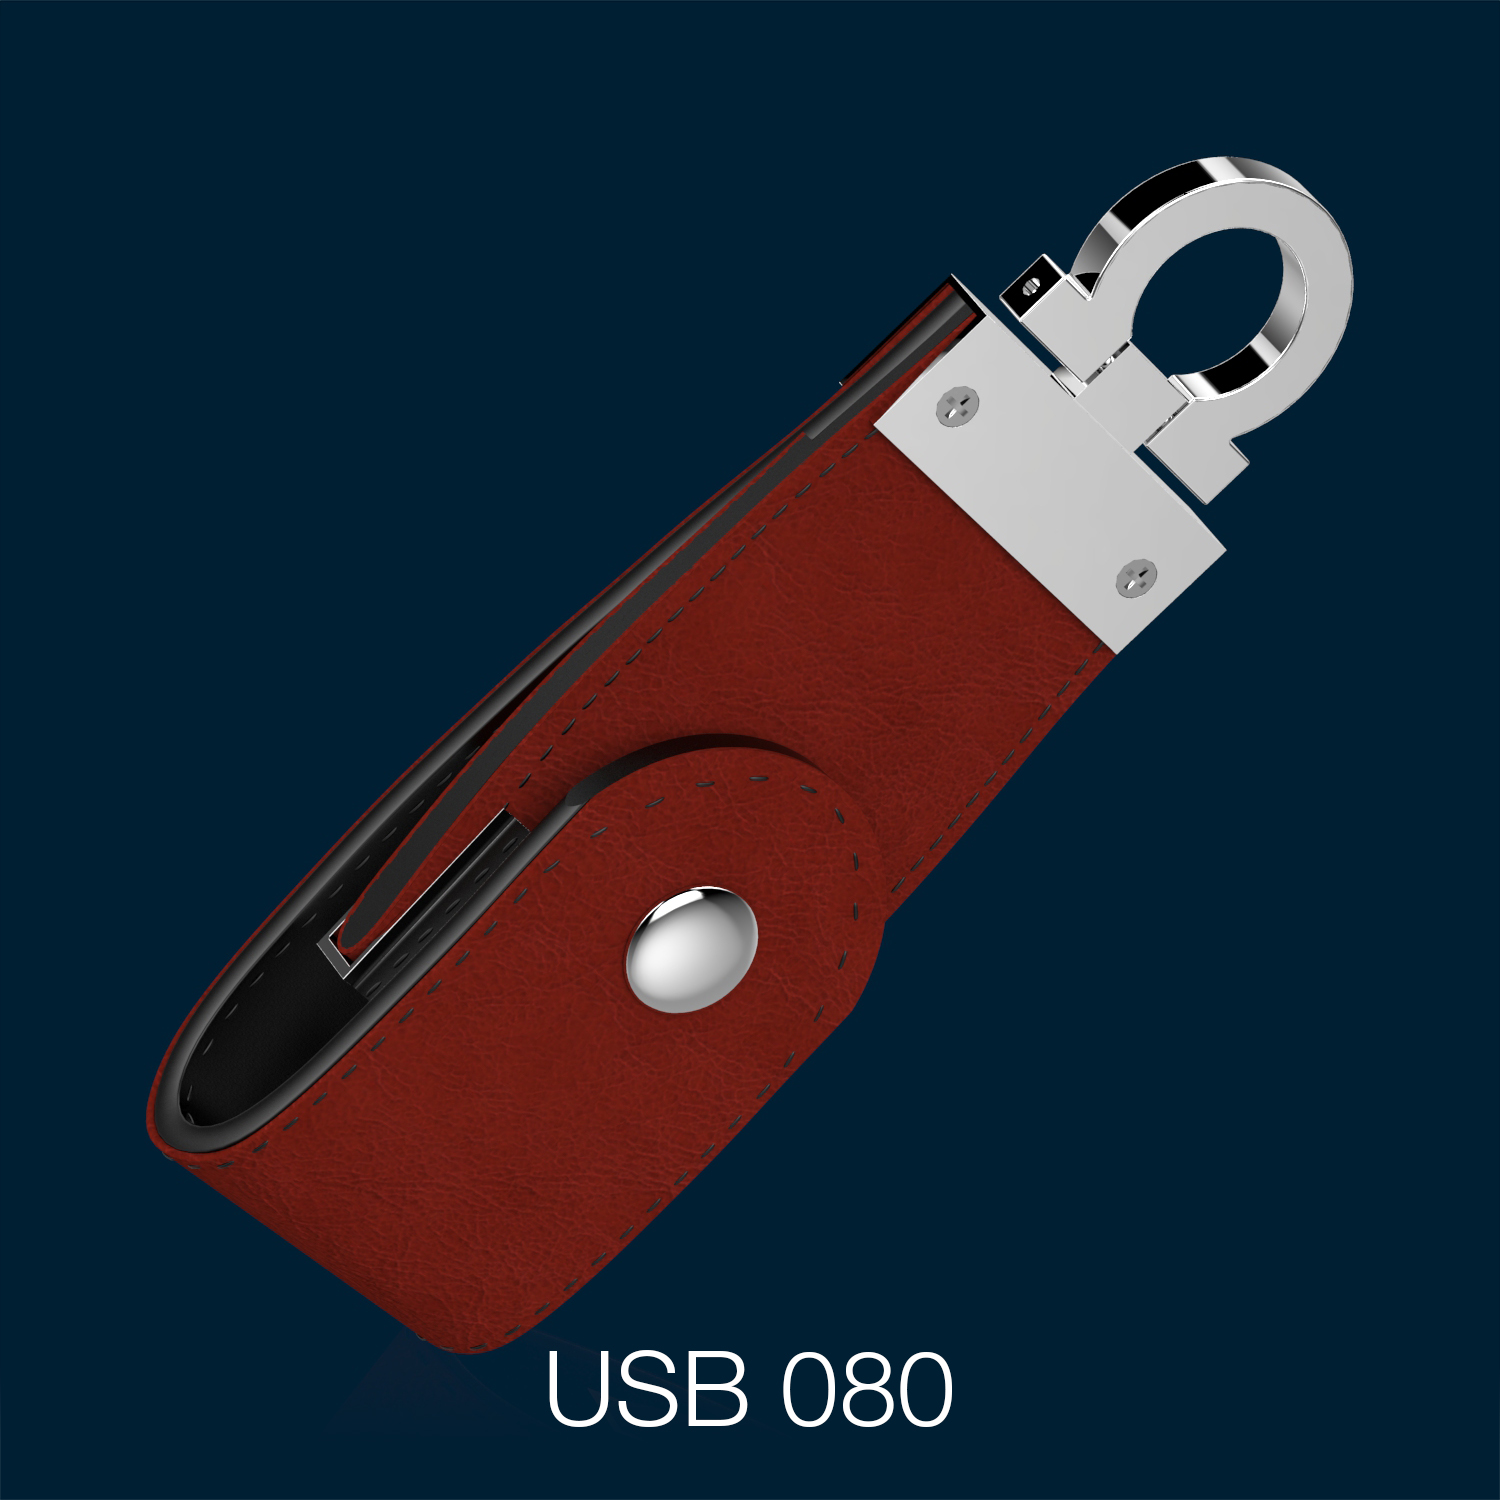 USB 080